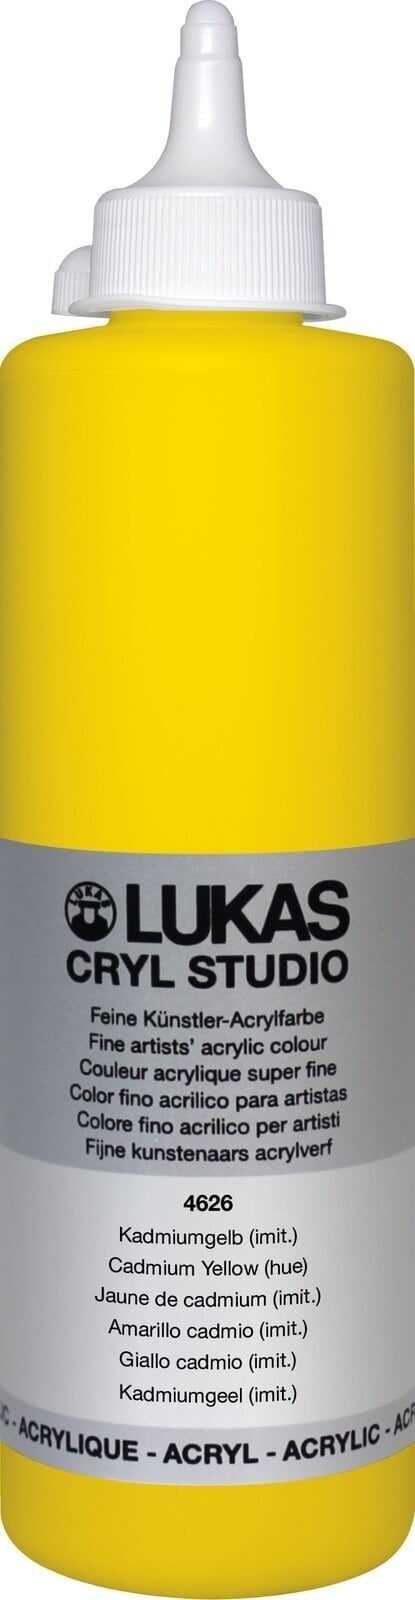 Levně Lukas Cryl Studio Akrylová barva 500 ml Cadmium Yellow Hue